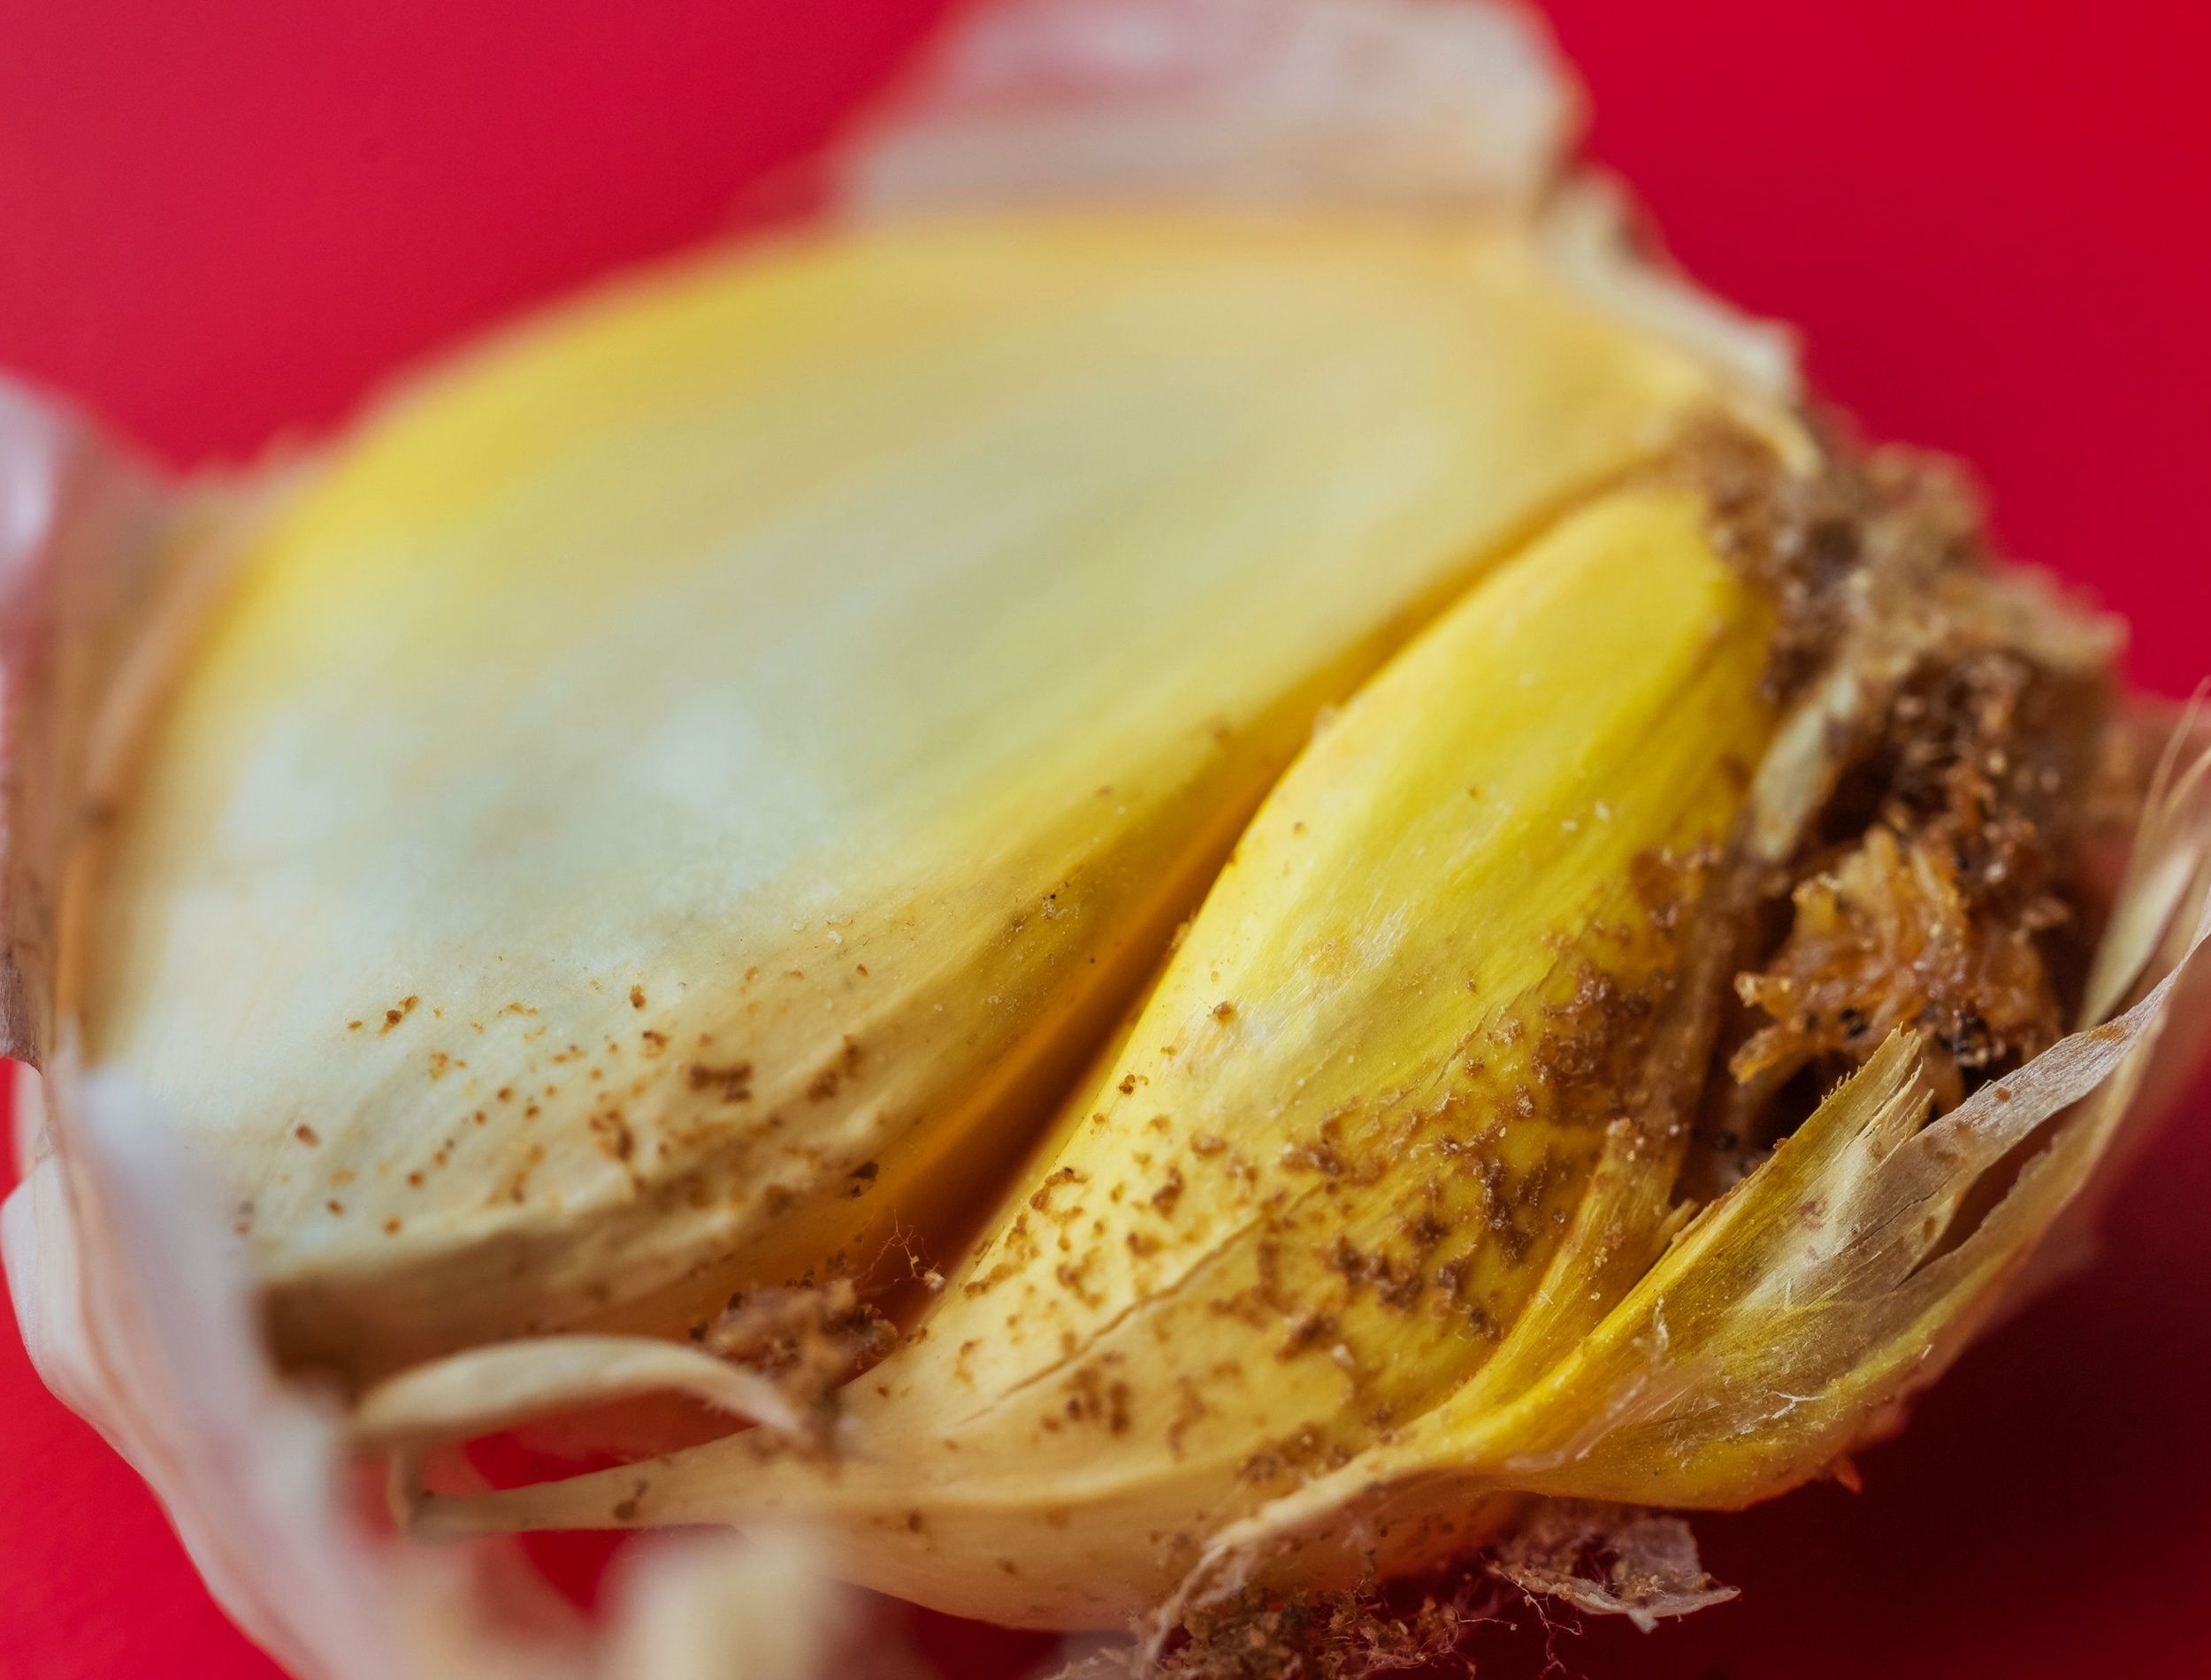 Garlic head with pest close-up macro photography. Onion fly larvae in garlic. Garlic bulb damaged by pest